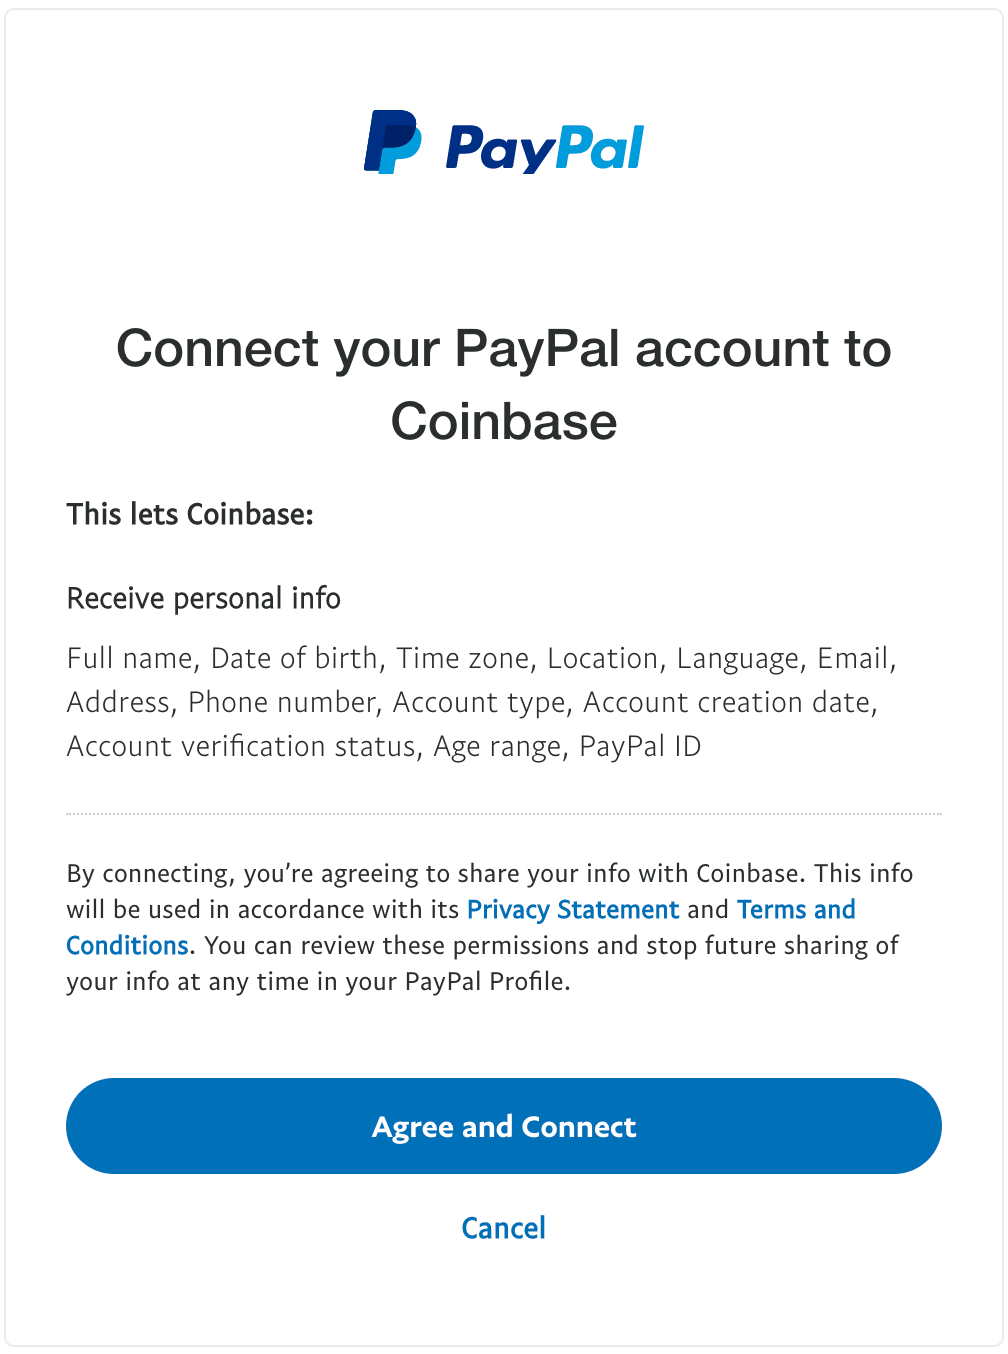 Koble PayPal-kontoen din til Coinbase